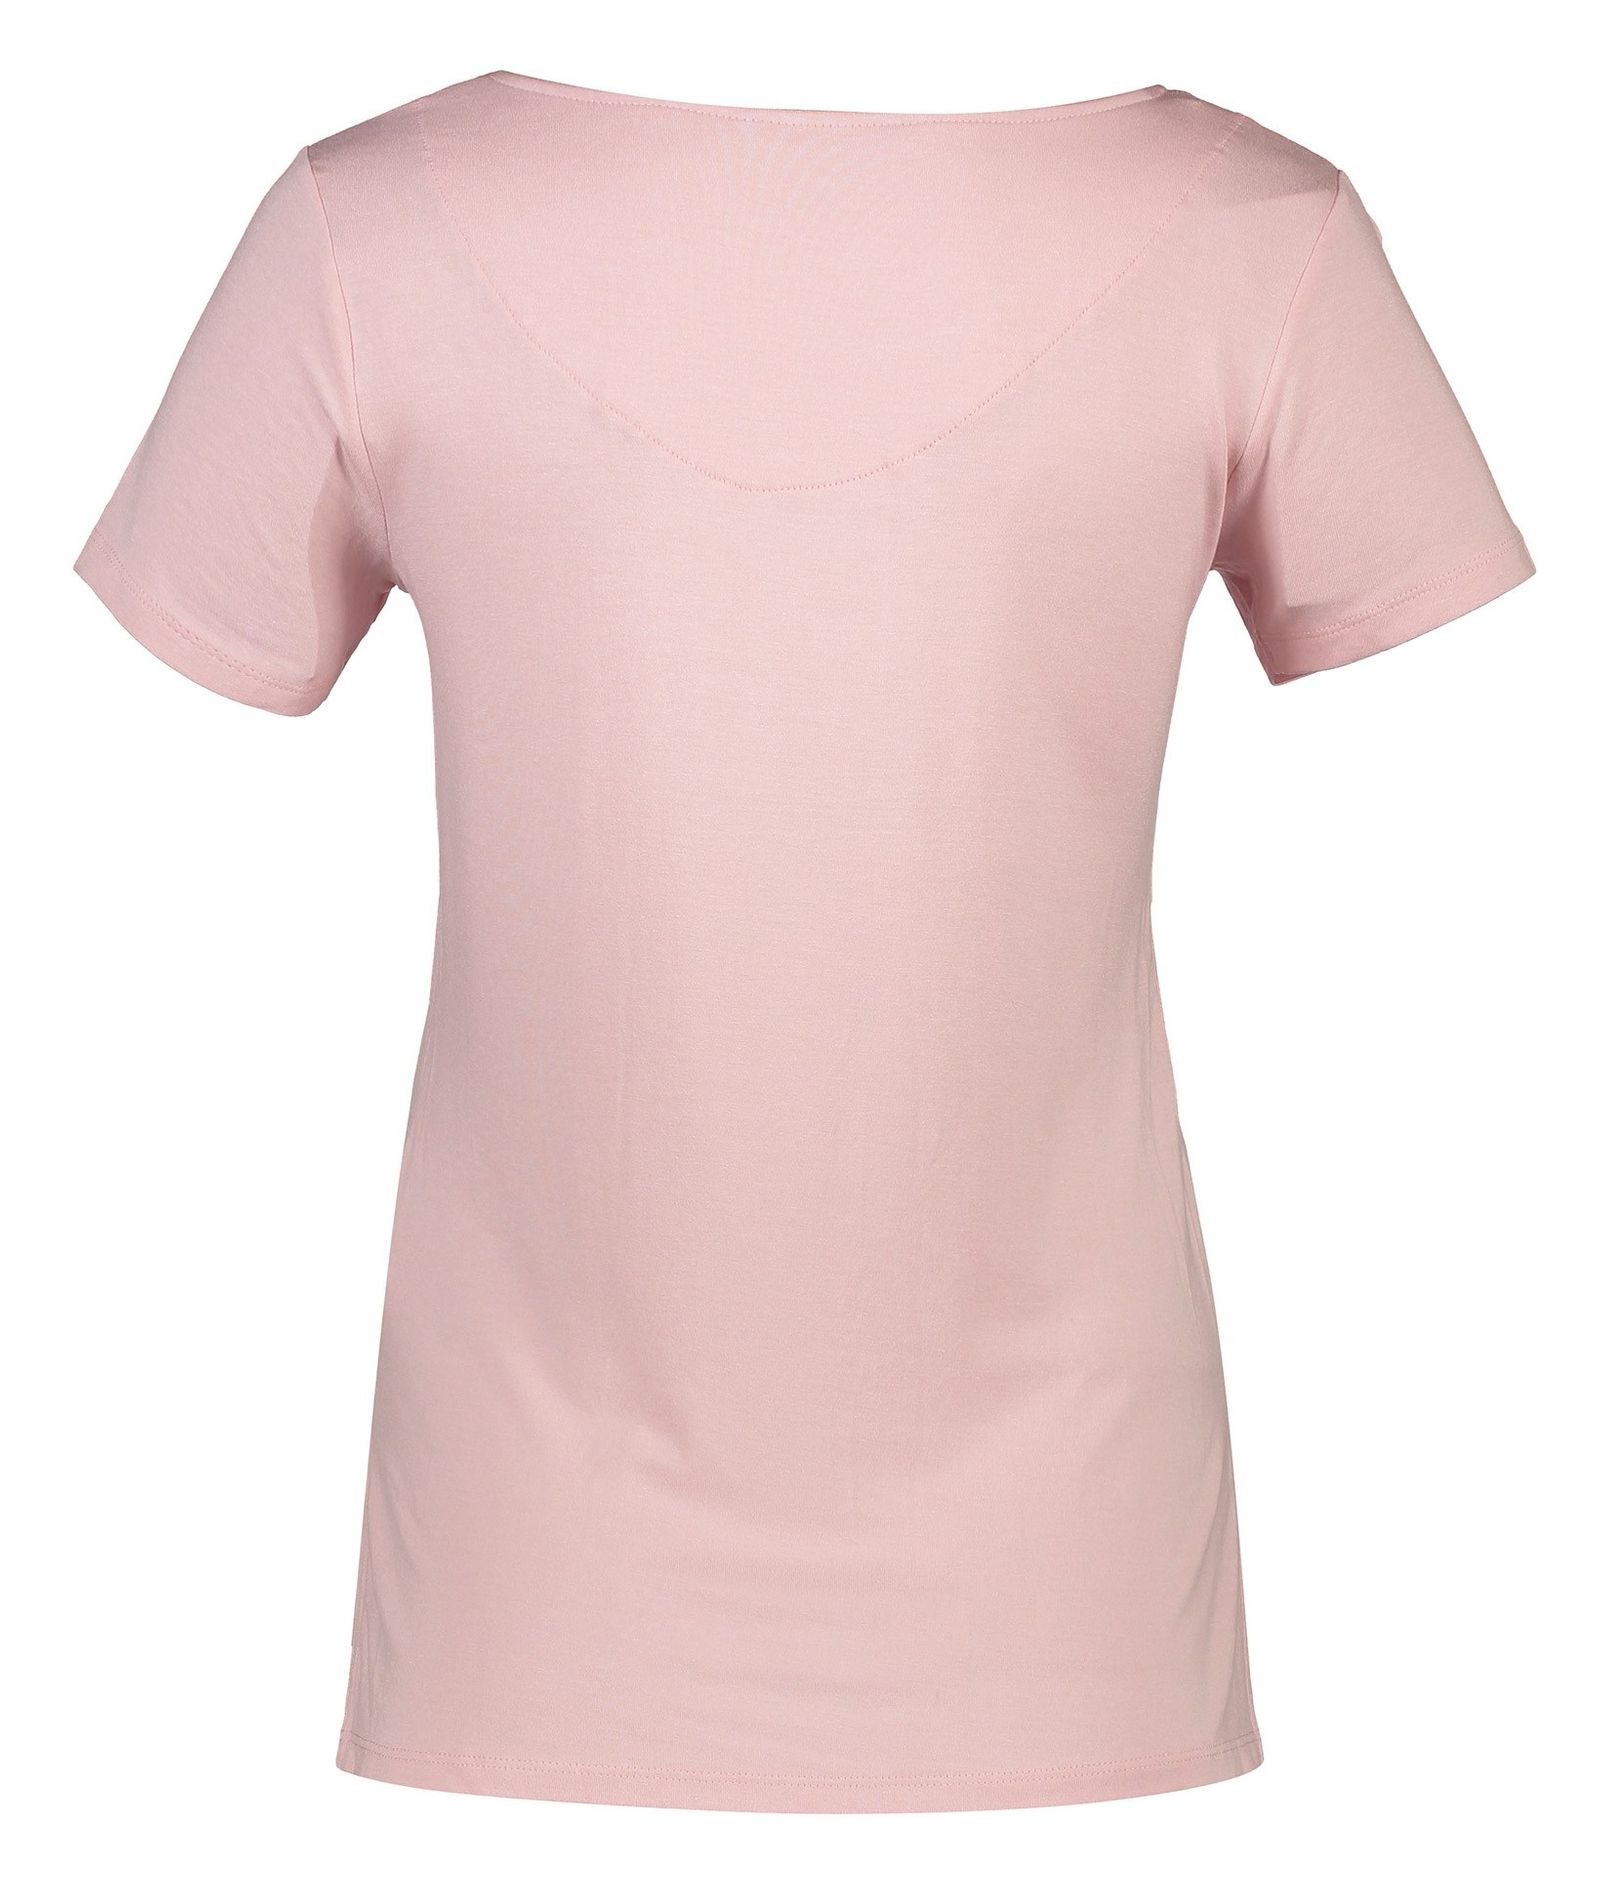 تی شرت ویسکوز یقه گرد زنانه - کالکشن - صورتي - 3